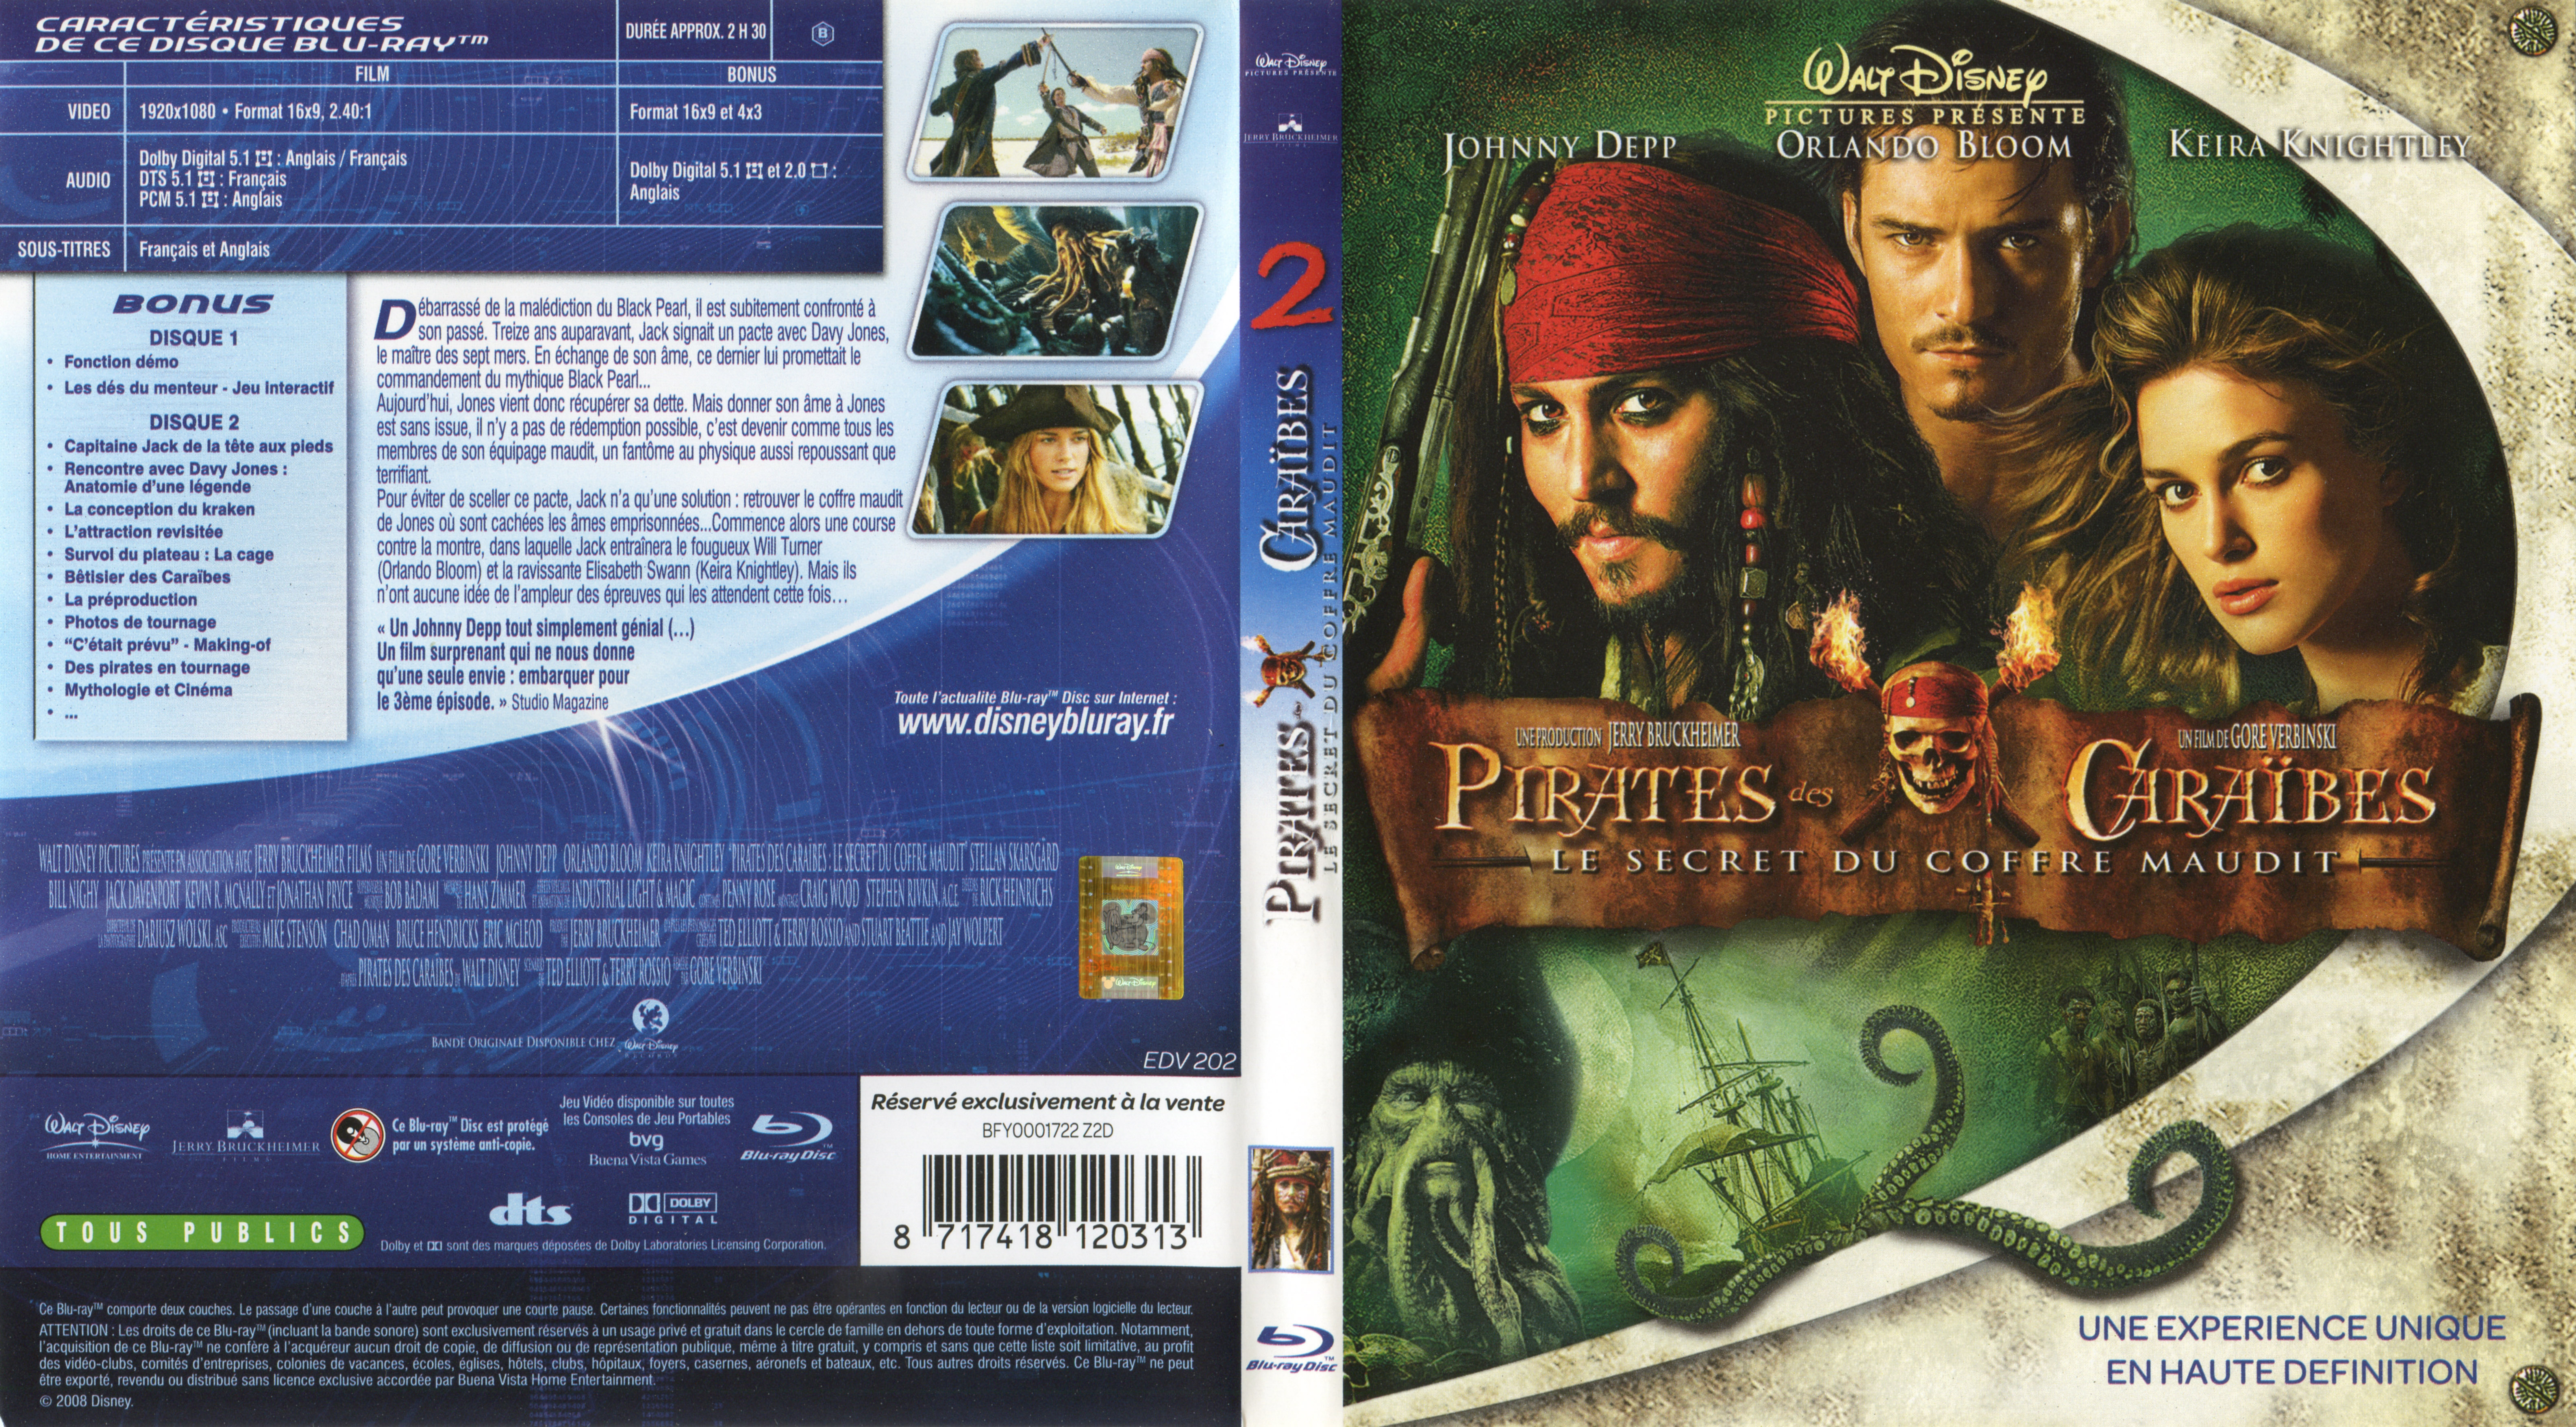 Jaquette DVD Pirates des Caraibes 2 (BLU-RAY) v2